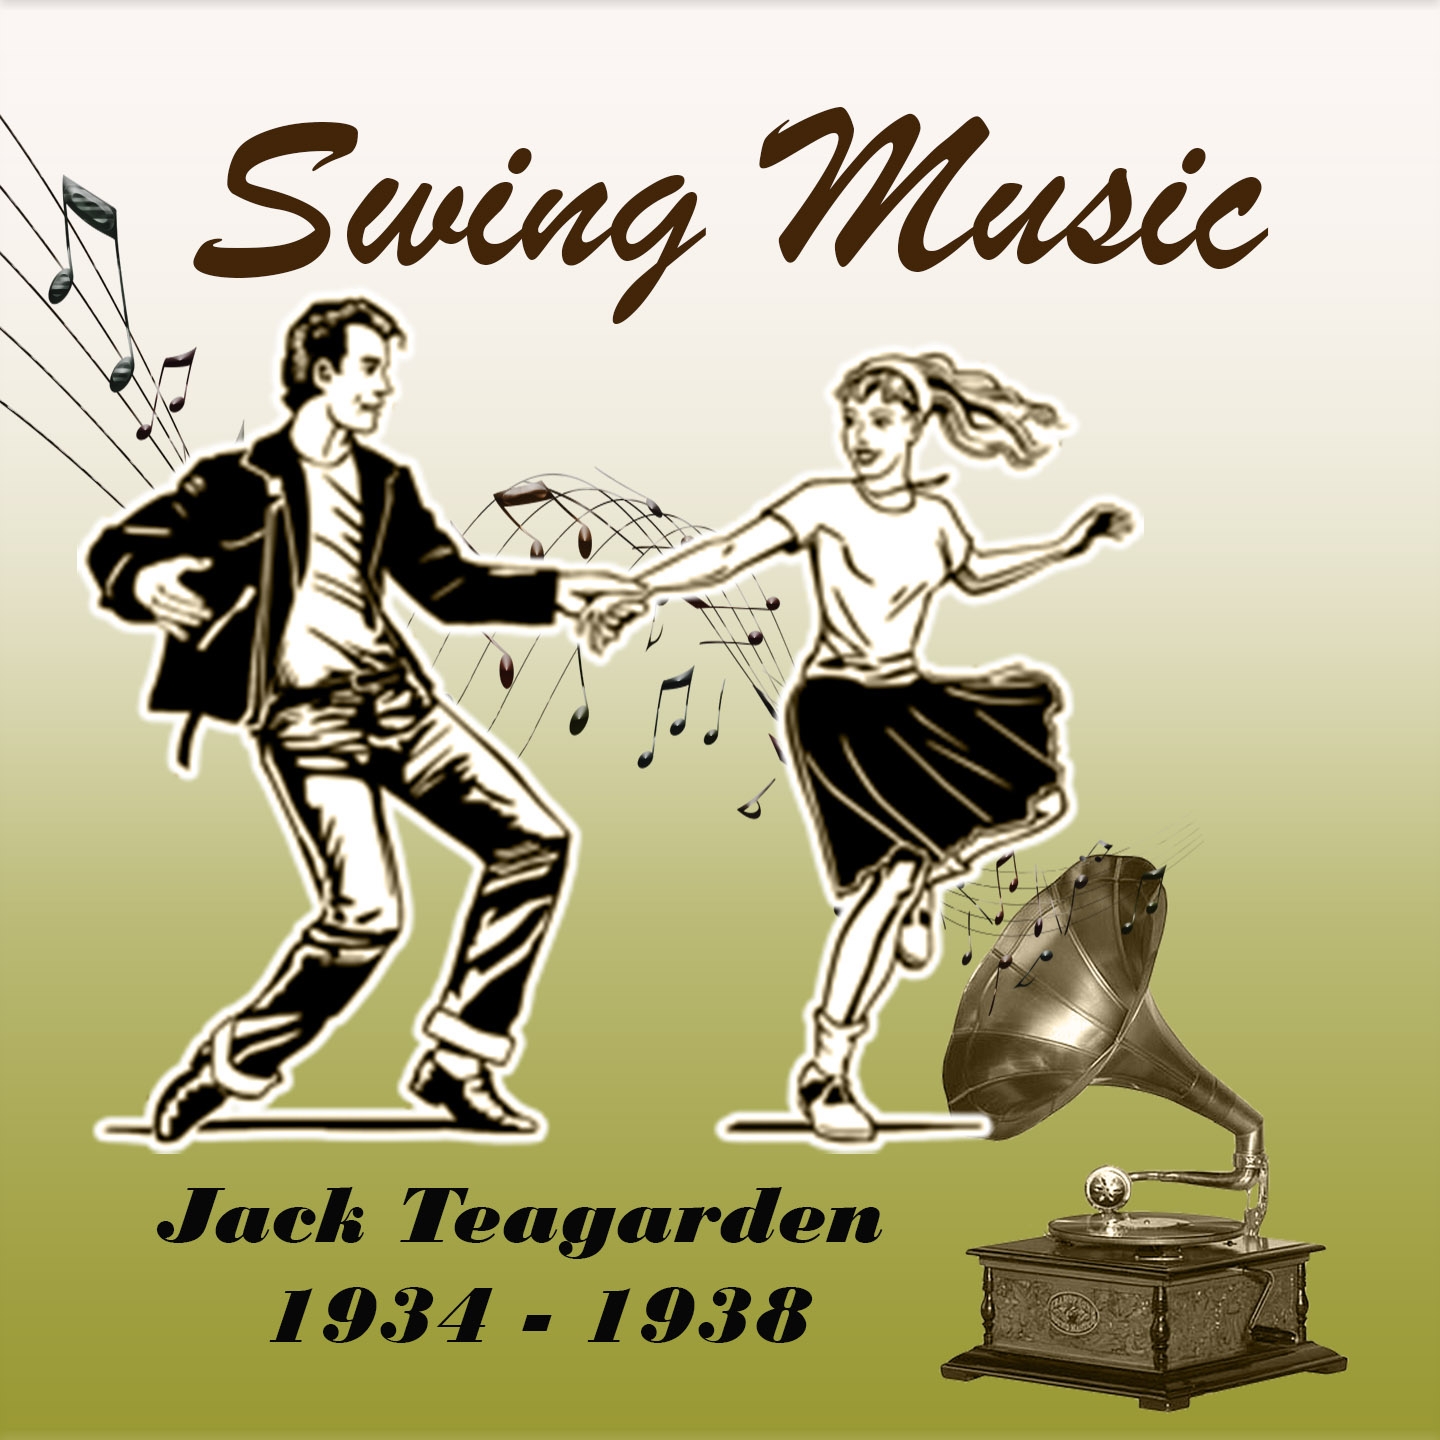 Swing Music, Jack Teagarden 1934 - 1938